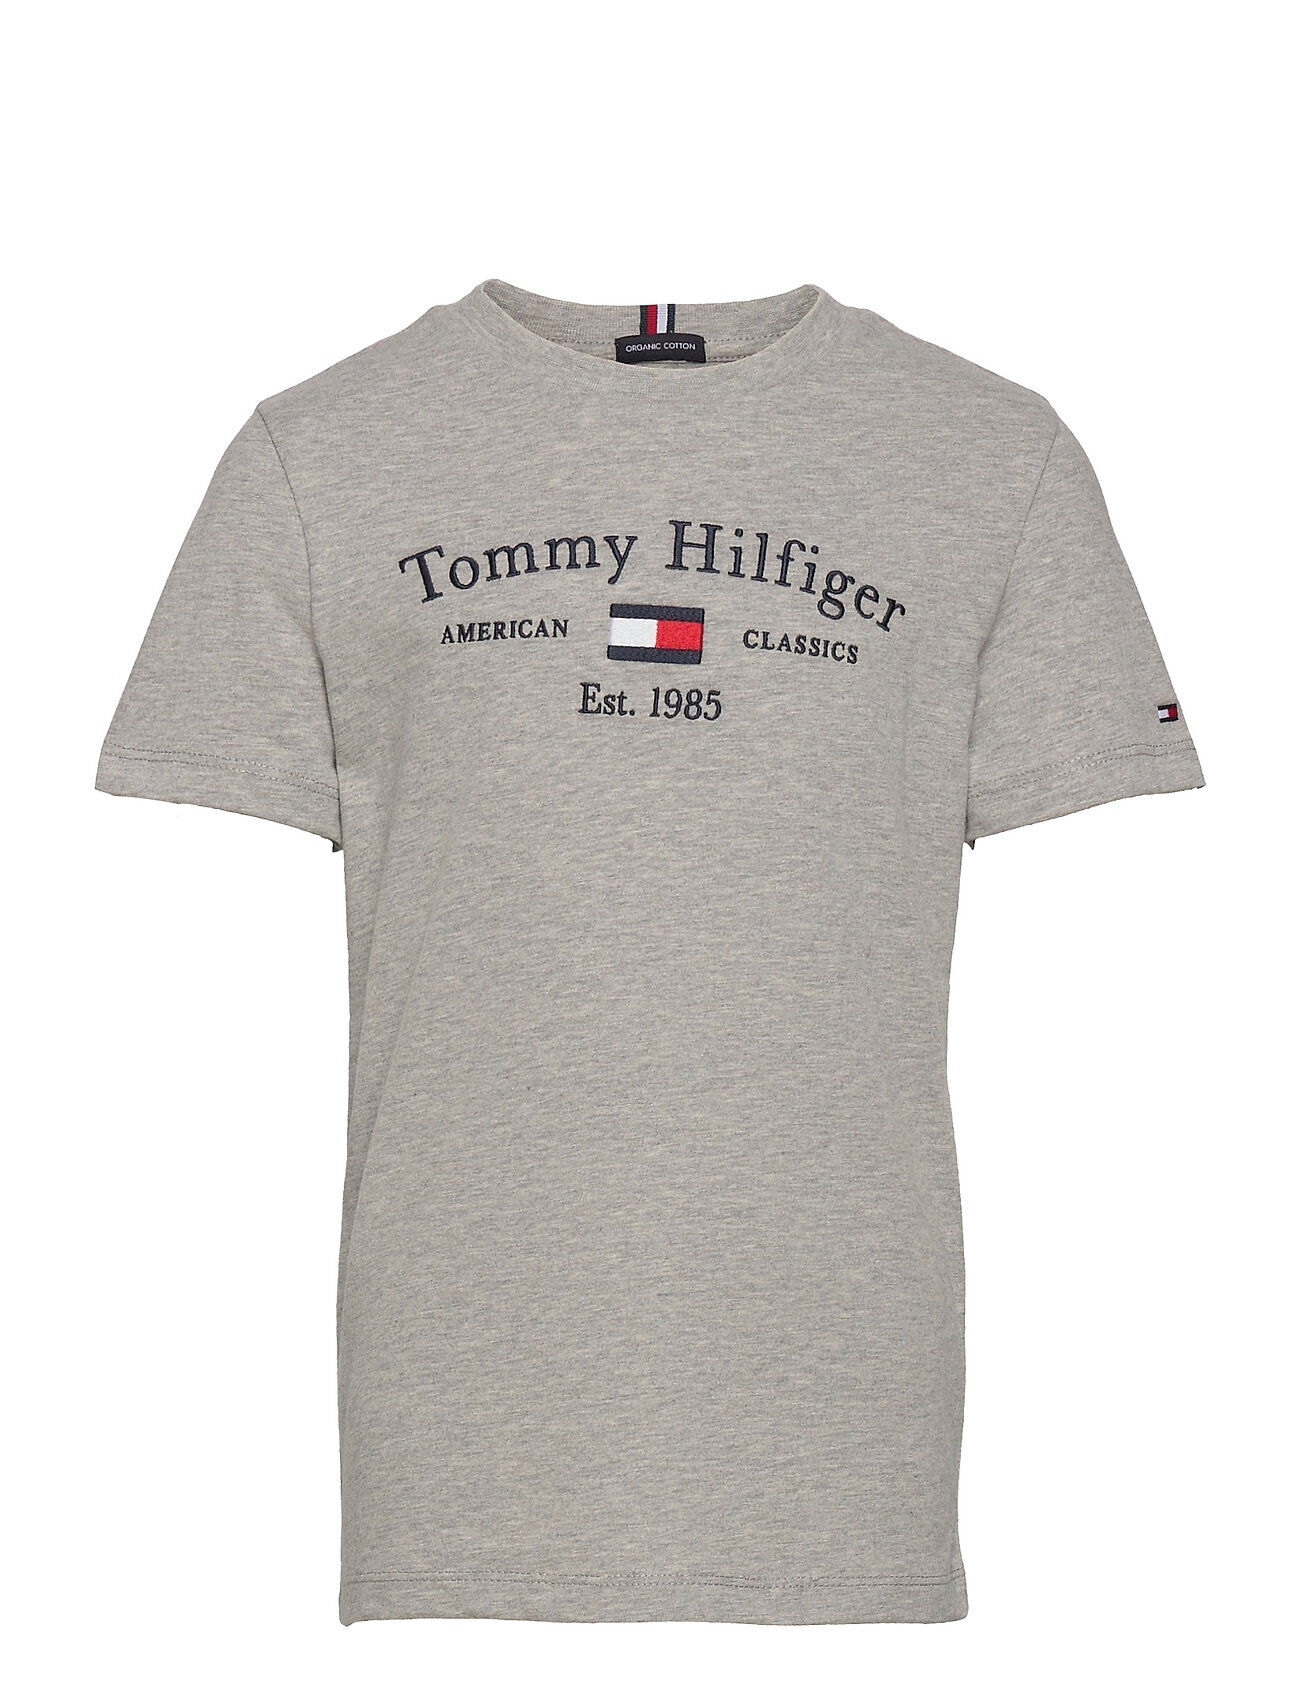 Tommy Hilfiger Th Artwork Tee S/S T-shirts Short-sleeved Grå Tommy Hilfiger